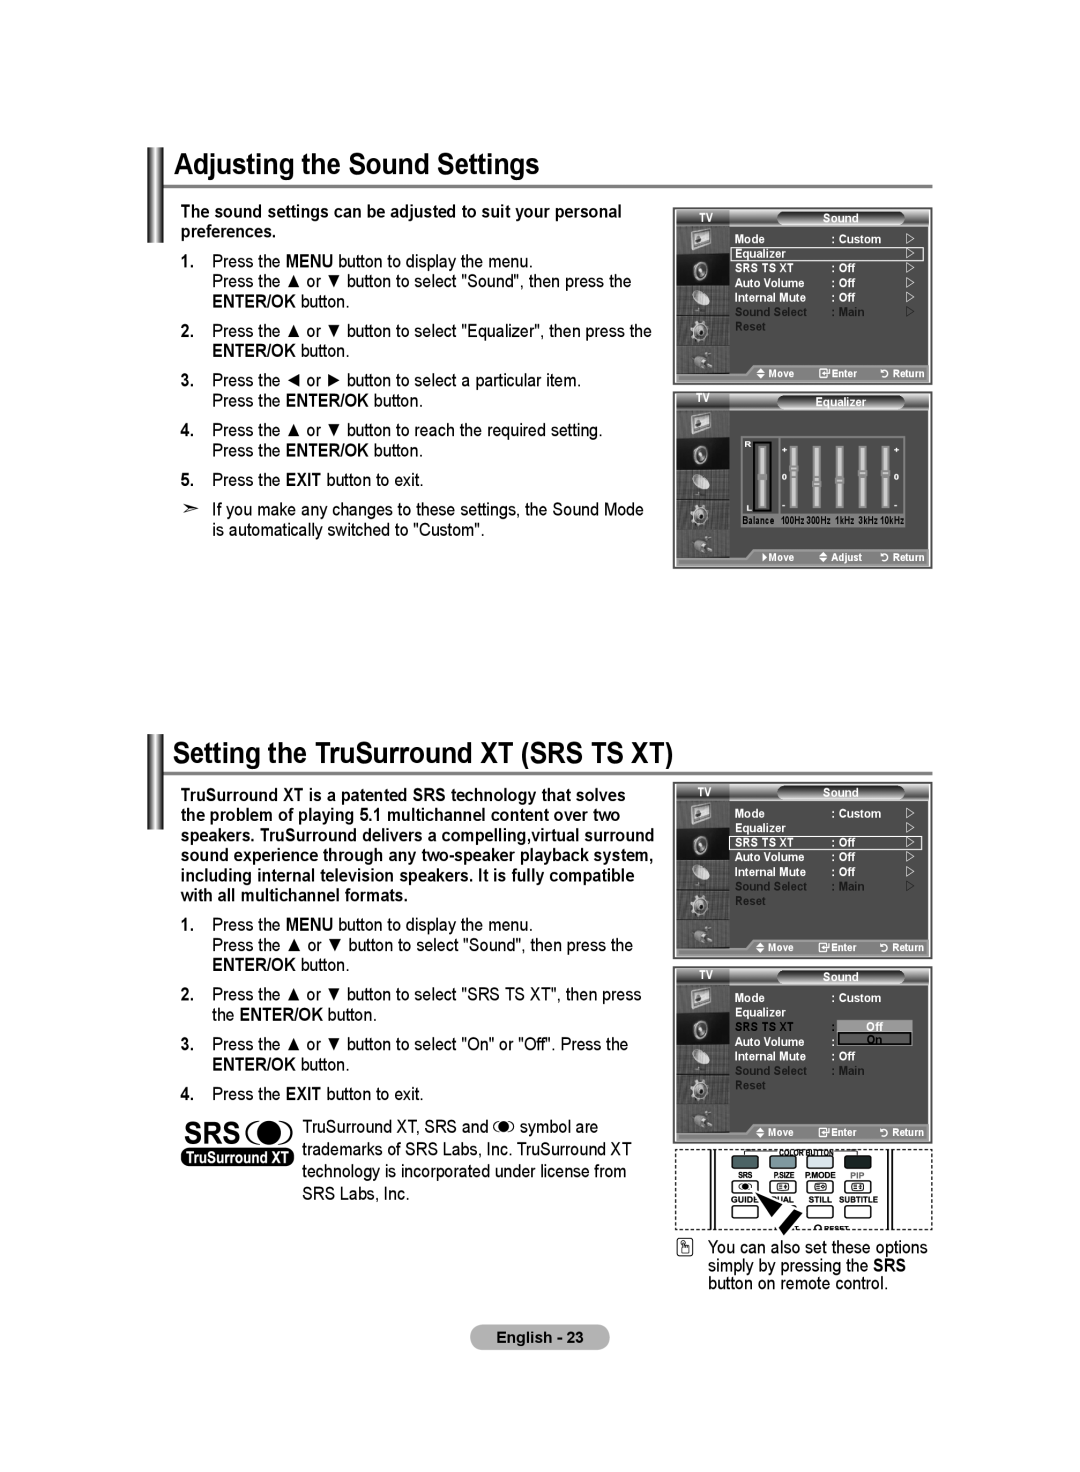 Samsung LE46S8, LE37S8, LE32S8, LE40S8 Adjusting the Sound Settings, Setting the TruSurround XT SRS TS XT, ENTER/OK button 